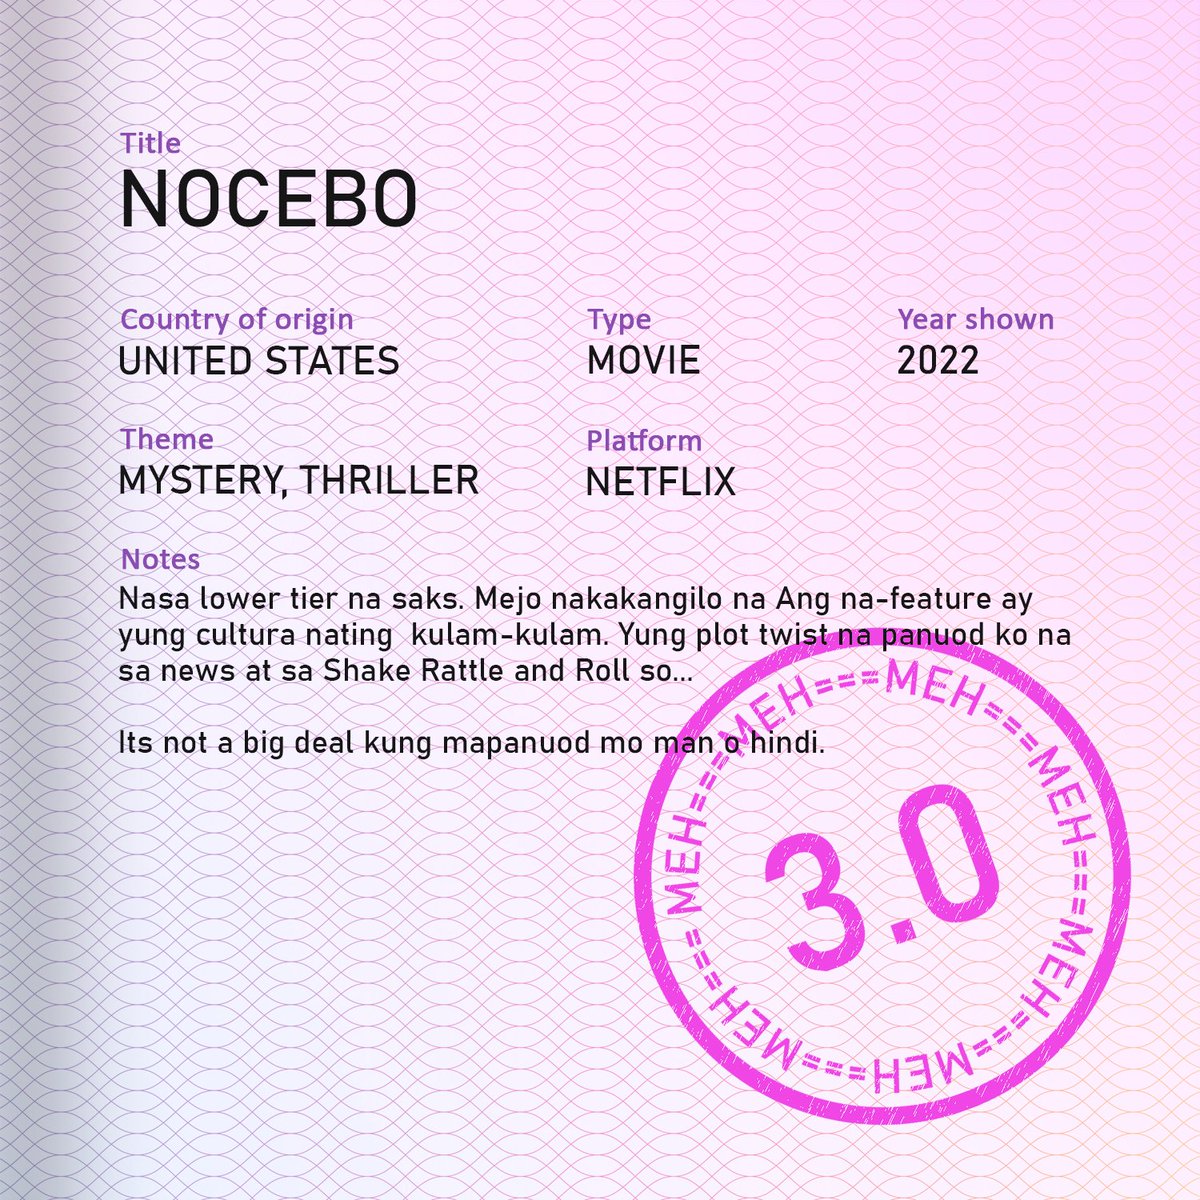 Series: Nocebo

Cast: 
Chai Fonacier
Eva Green
Mark Strong

#movie #film #review  #netflix #american #hollywood #hollywoodmovie #trendingmovie #uz #series